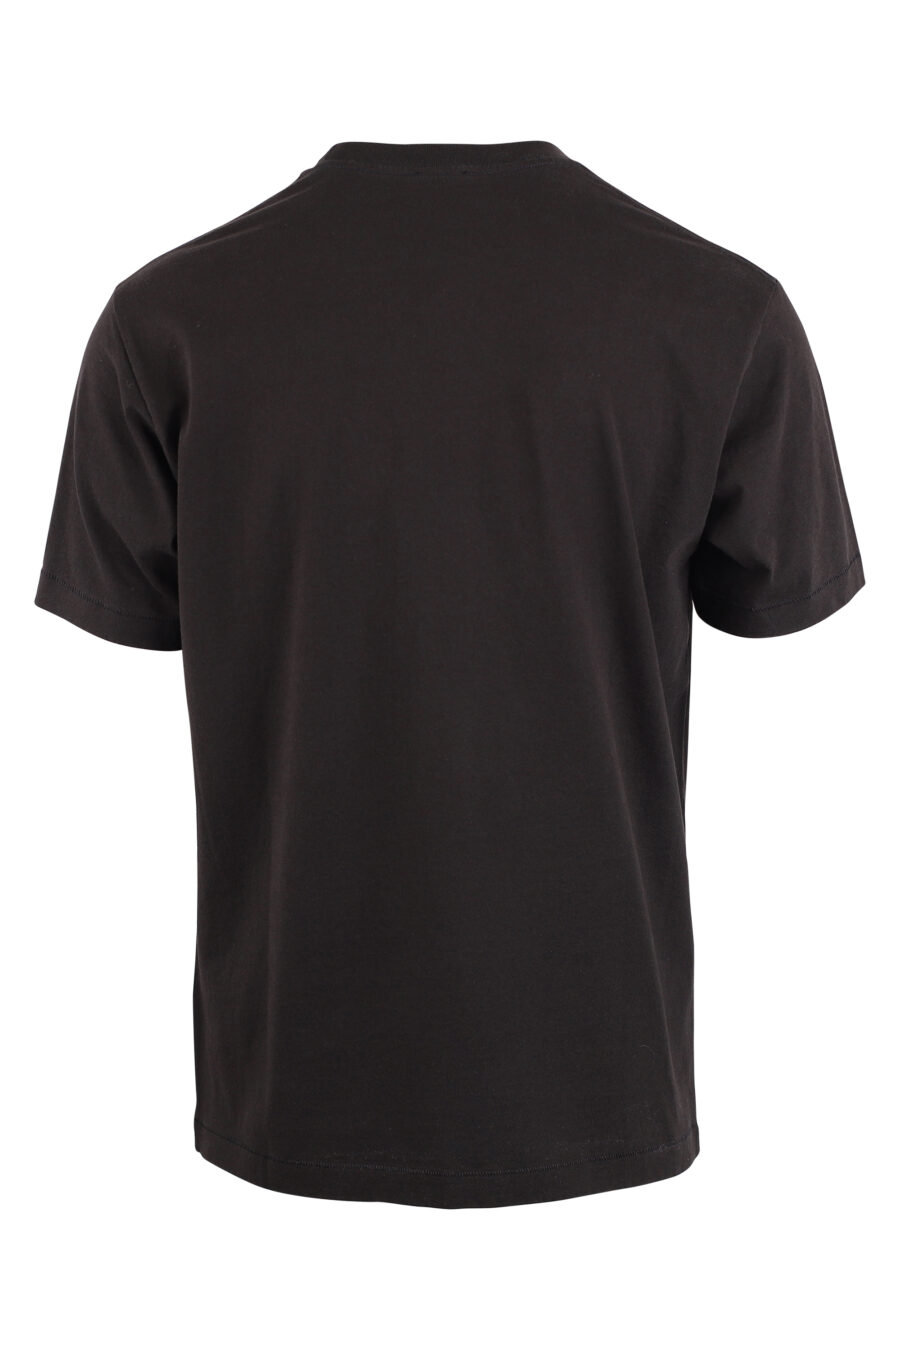 T-shirt preta com maxilogo laranja "paris classic" - IMG 9383